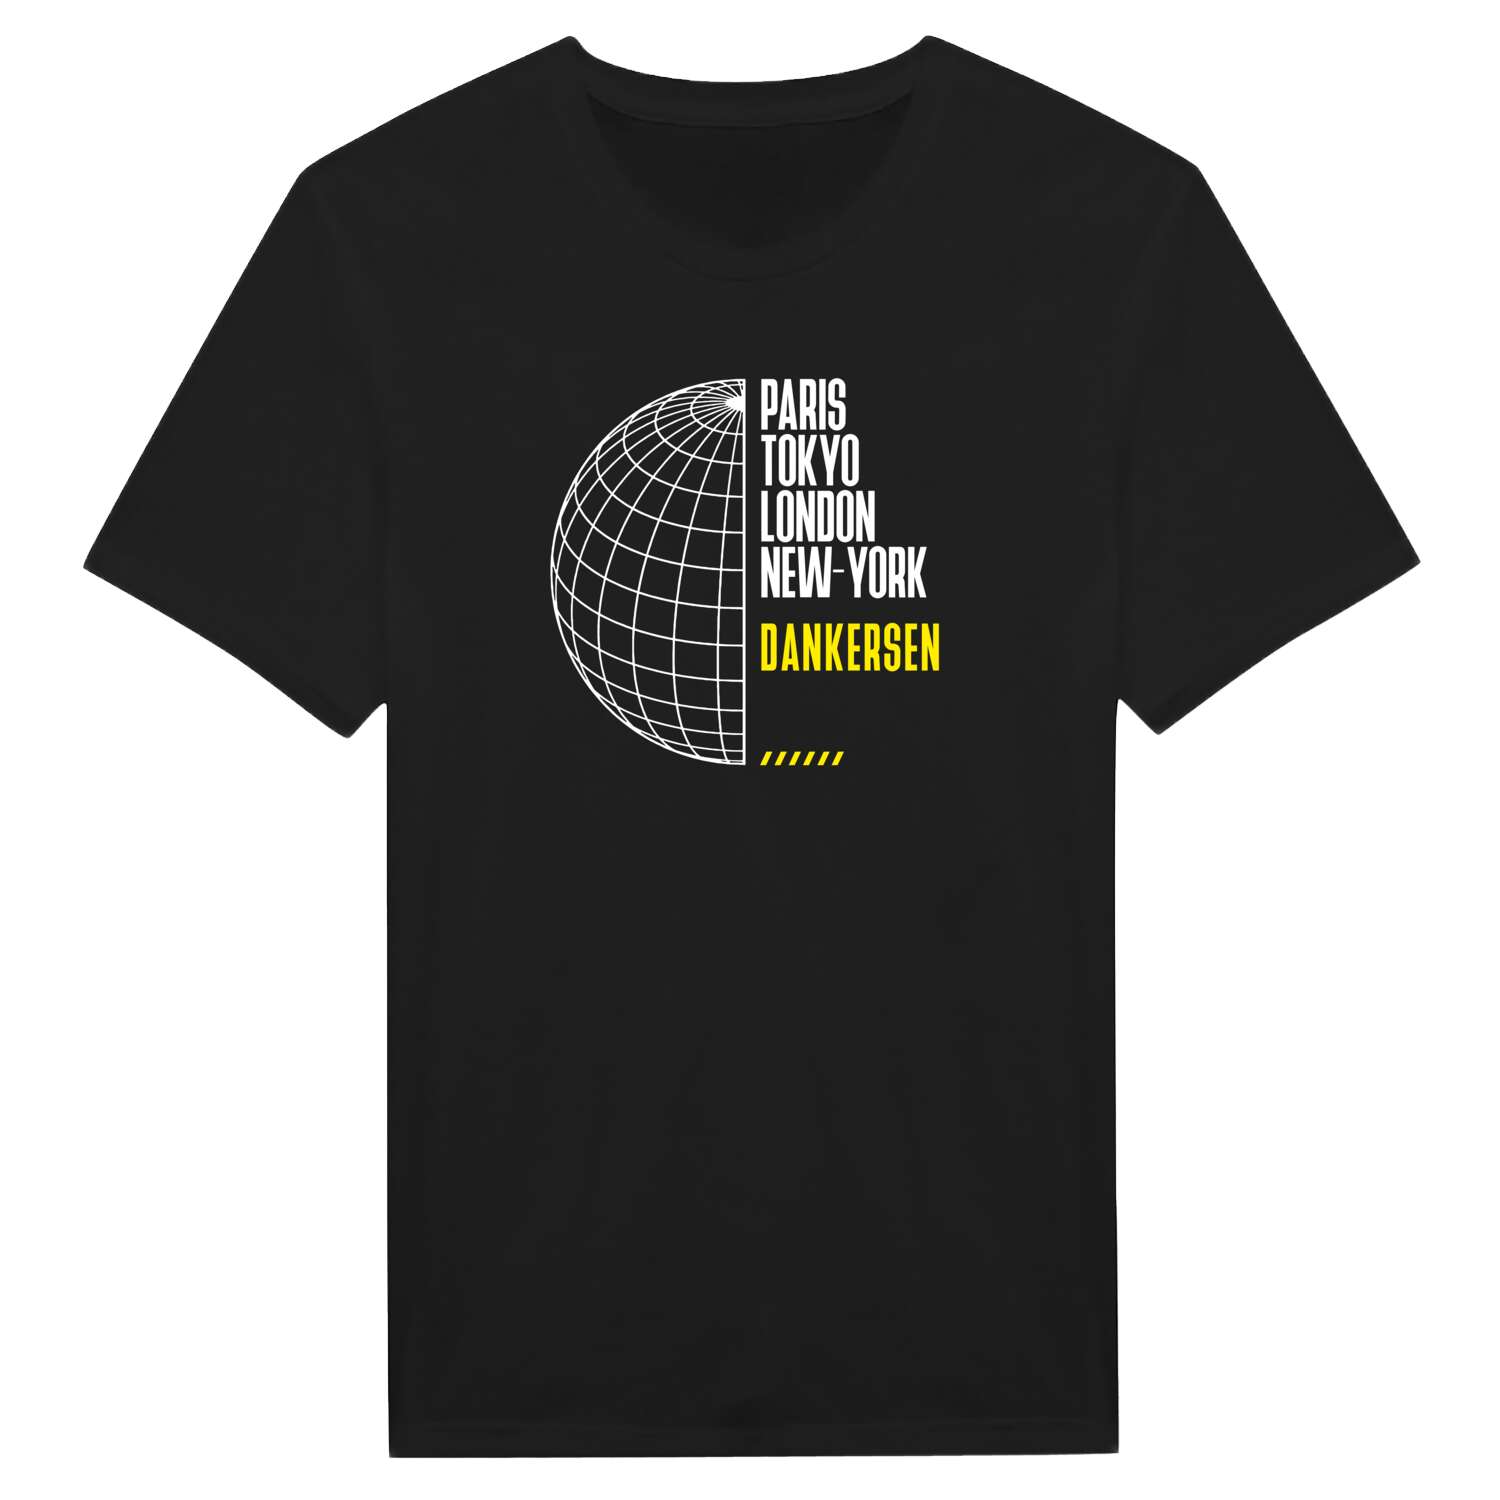 Dankersen T-Shirt »Paris Tokyo London«